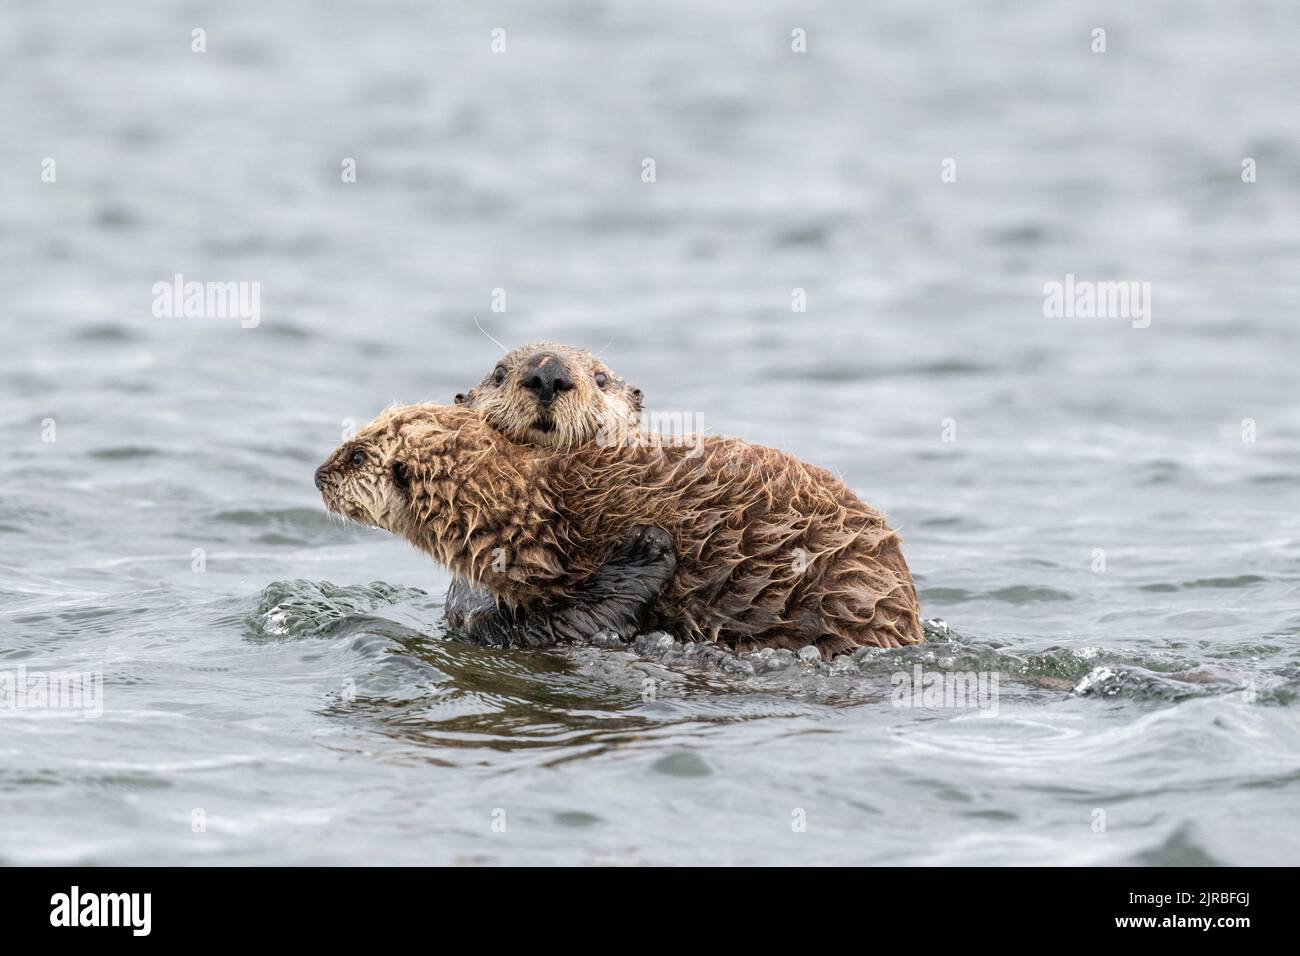 USA, SE Alaska, Inside Passage, Pinta Rocks near Petersburg. Sea otter mother and baby (Enhydra lutris) Stock Photo